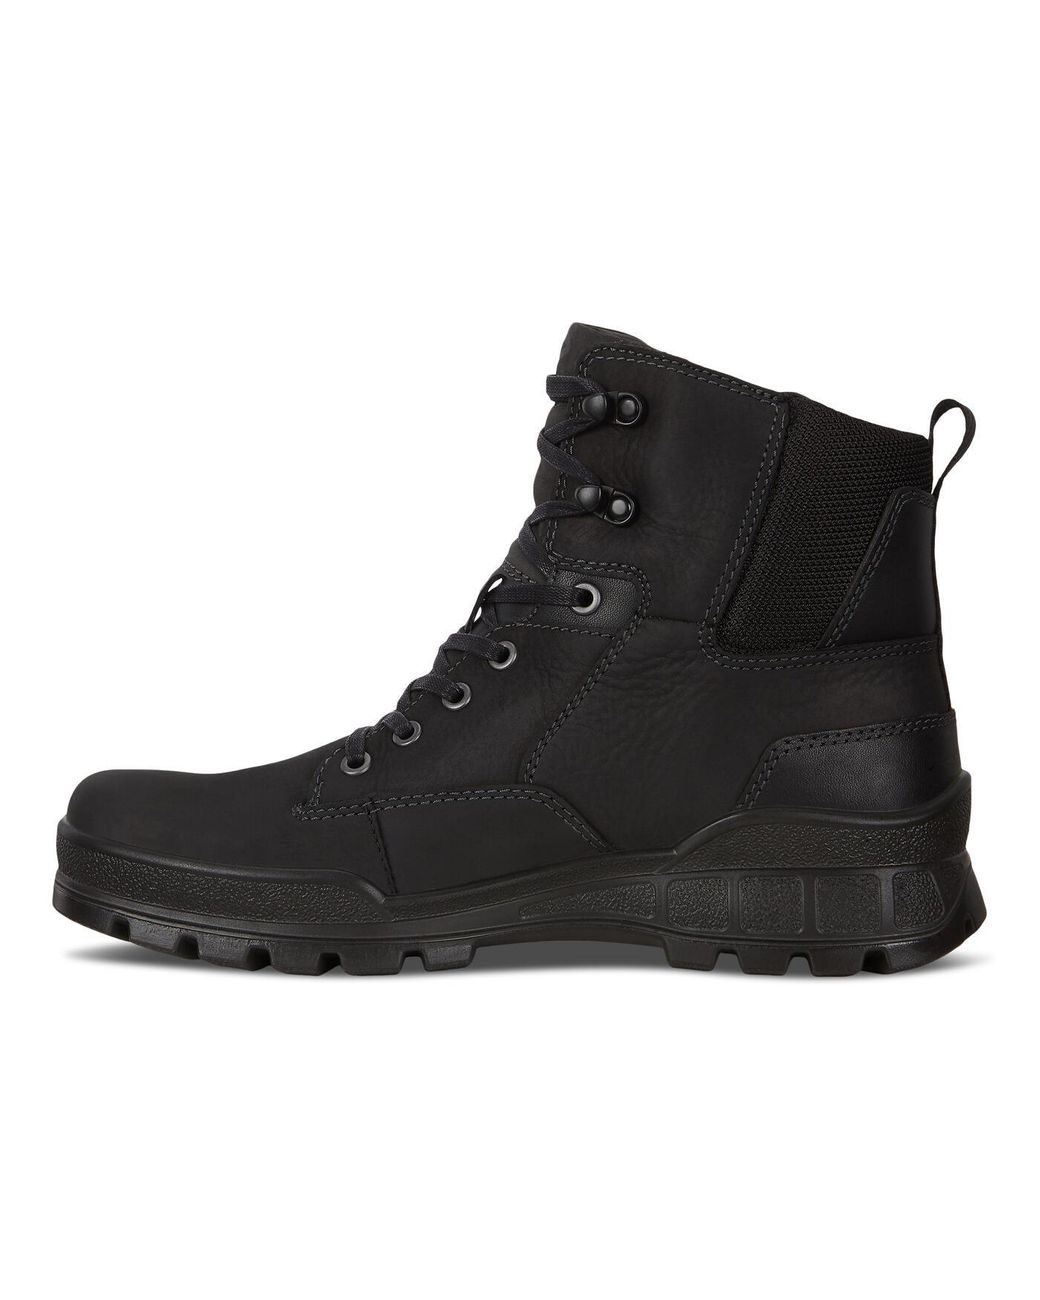 Ecco Rubber Track 25 Mid Hm Pl Boots Size 6 Black for Men - Lyst